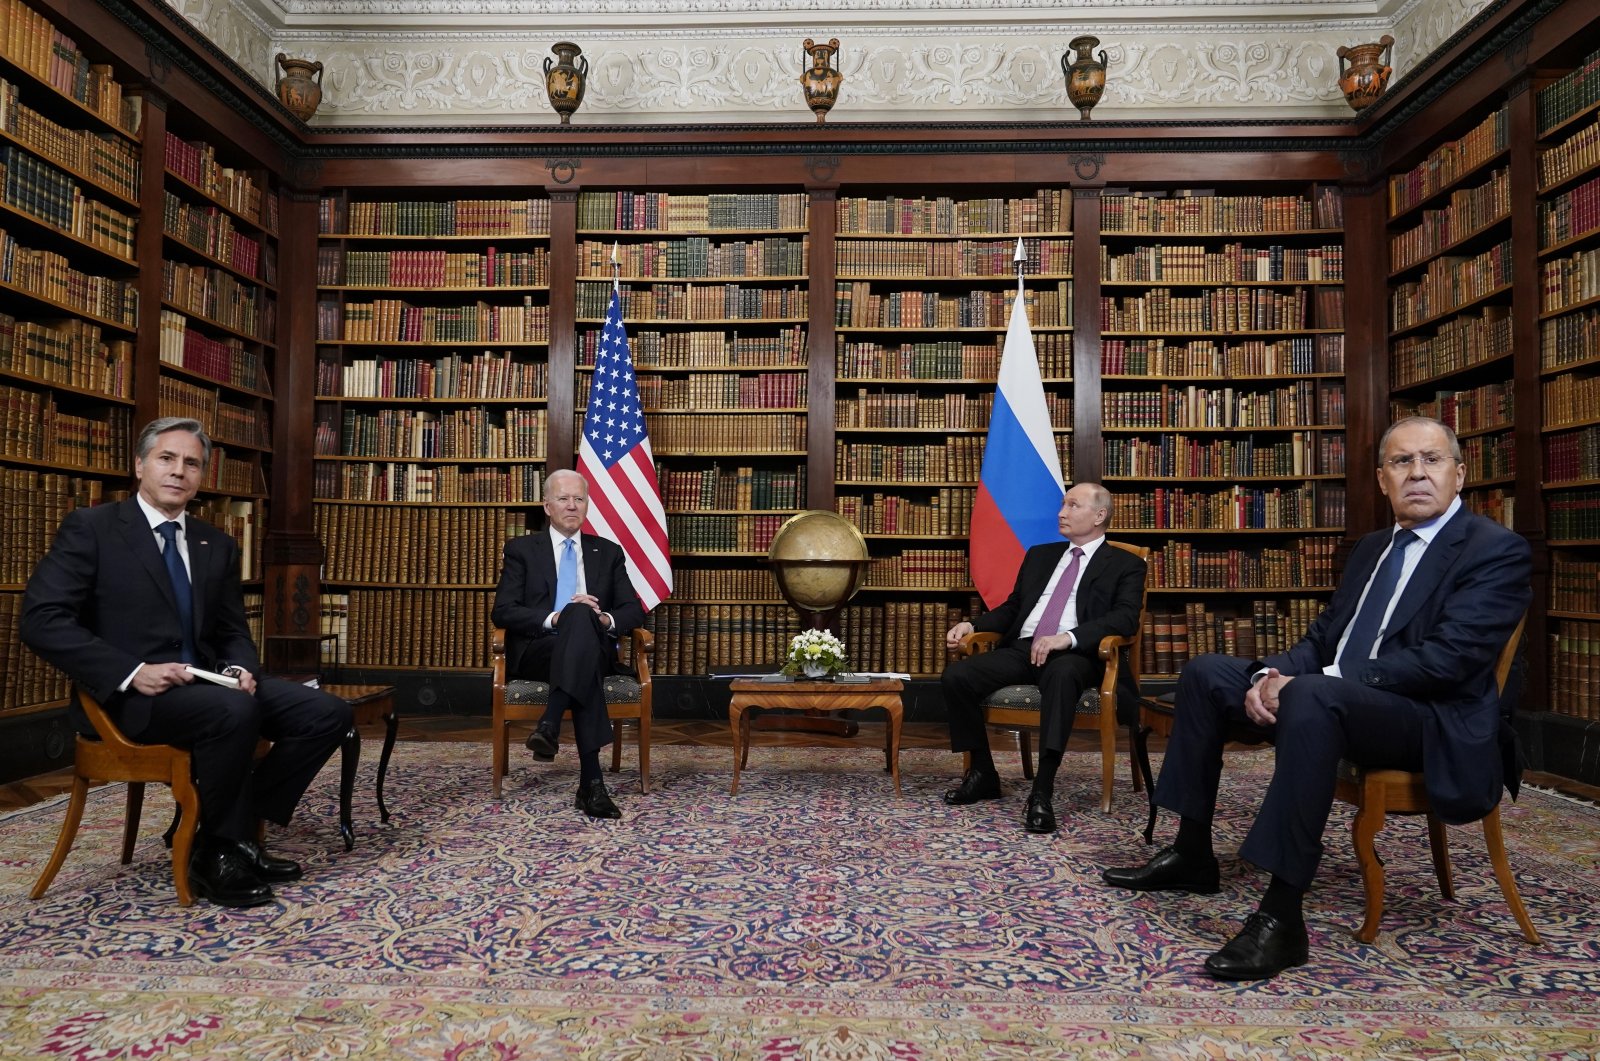 U.S. President Joe Biden and Secretary of State Antony Blinken (L) meet with Russian President Vladimir Putin and Foreign Minister Sergey Lavrov, at the "Villa la Grange," in Geneva, Switzerland, June 16, 2021. (AP Photo)